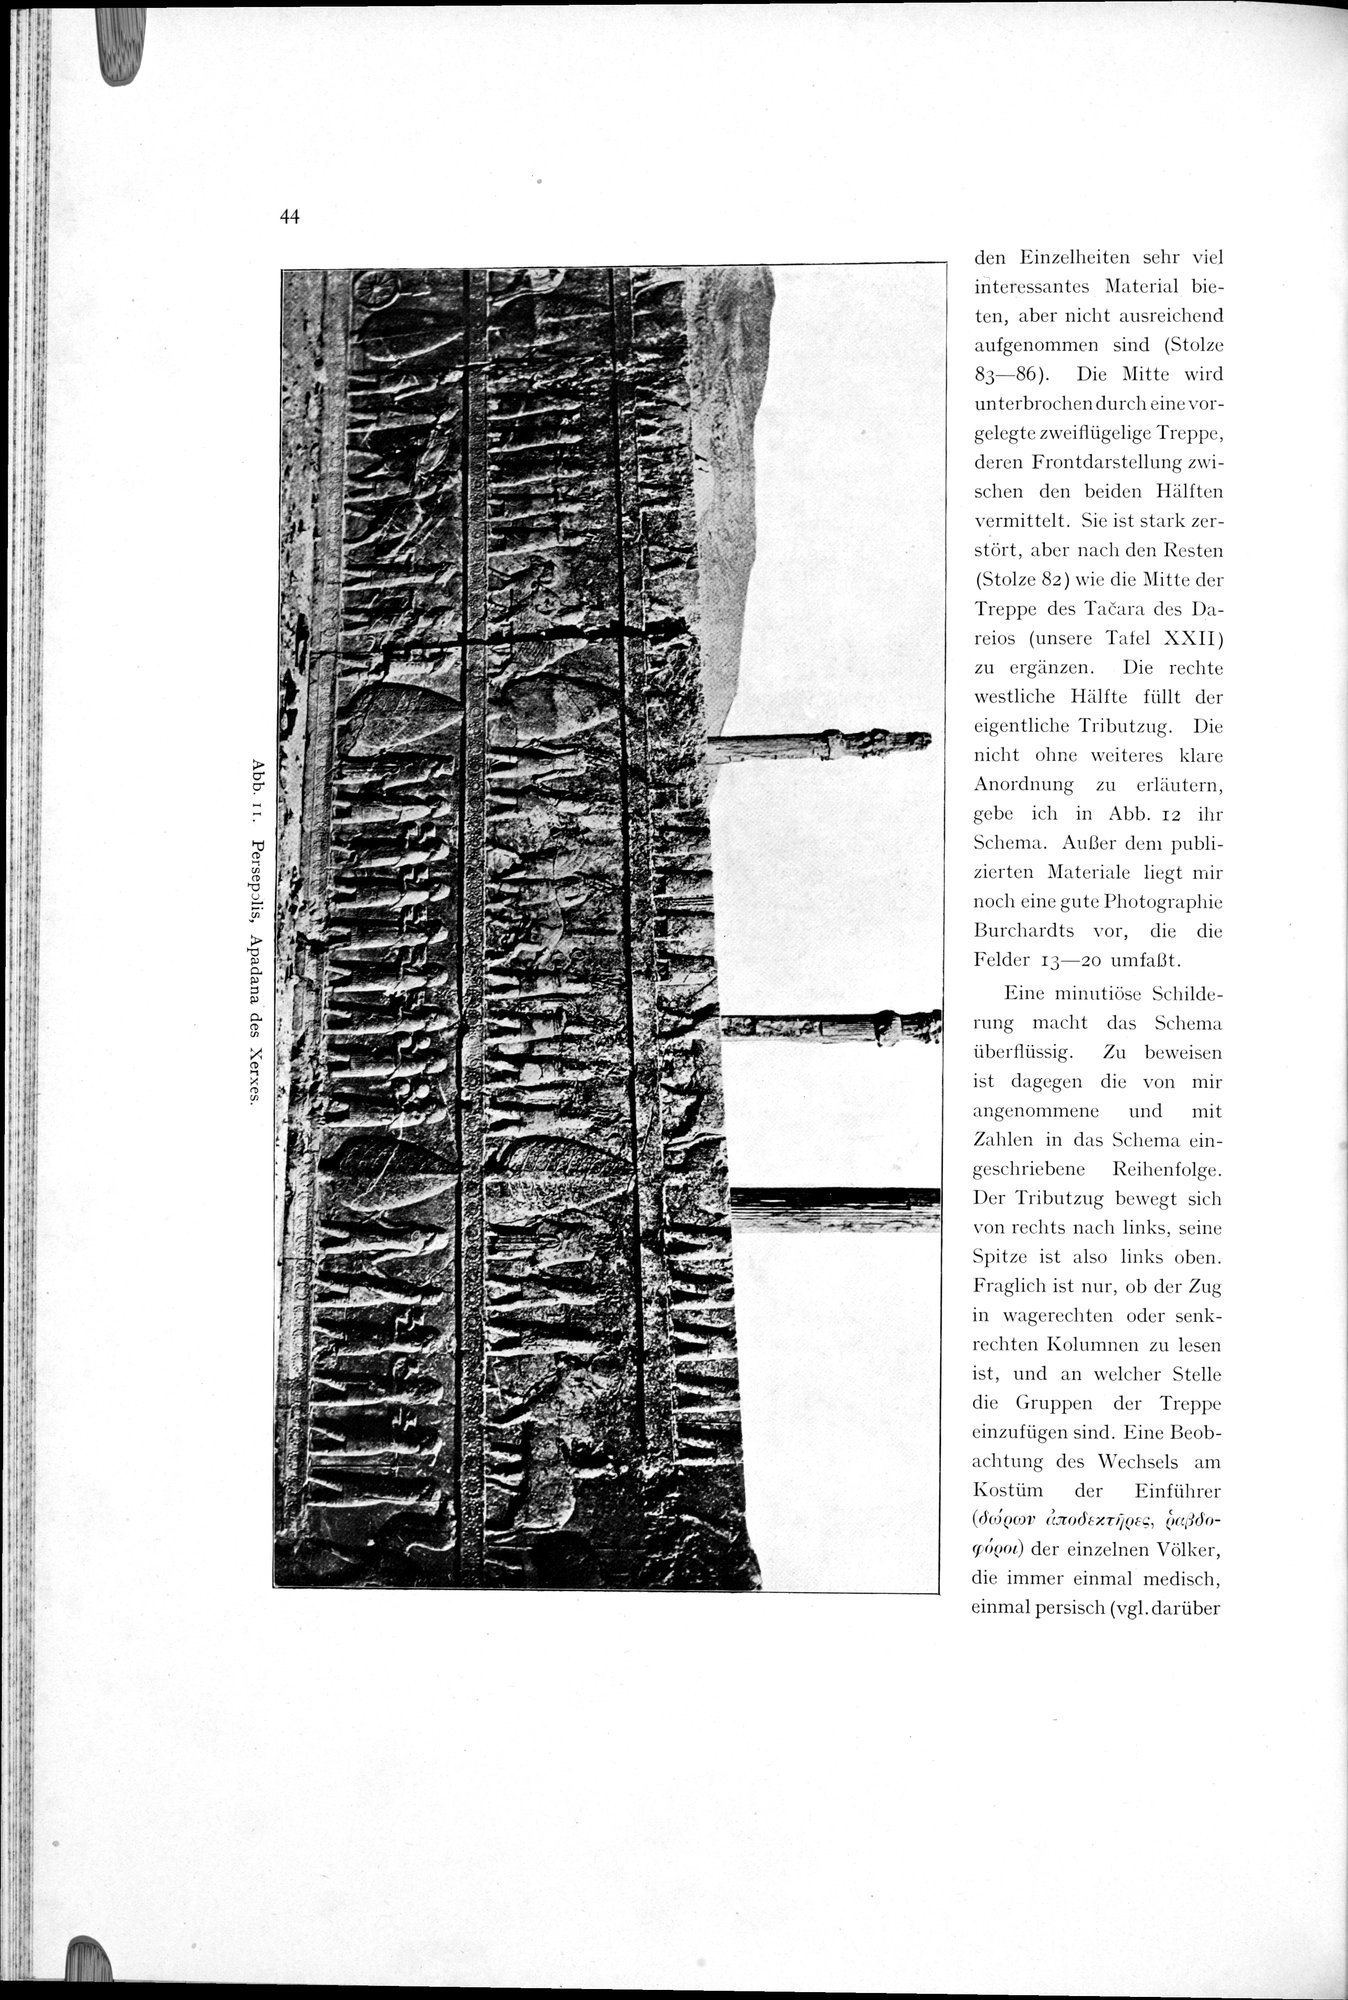 Iranische Felsreliefs : vol.1 / Page 56 (Grayscale High Resolution Image)